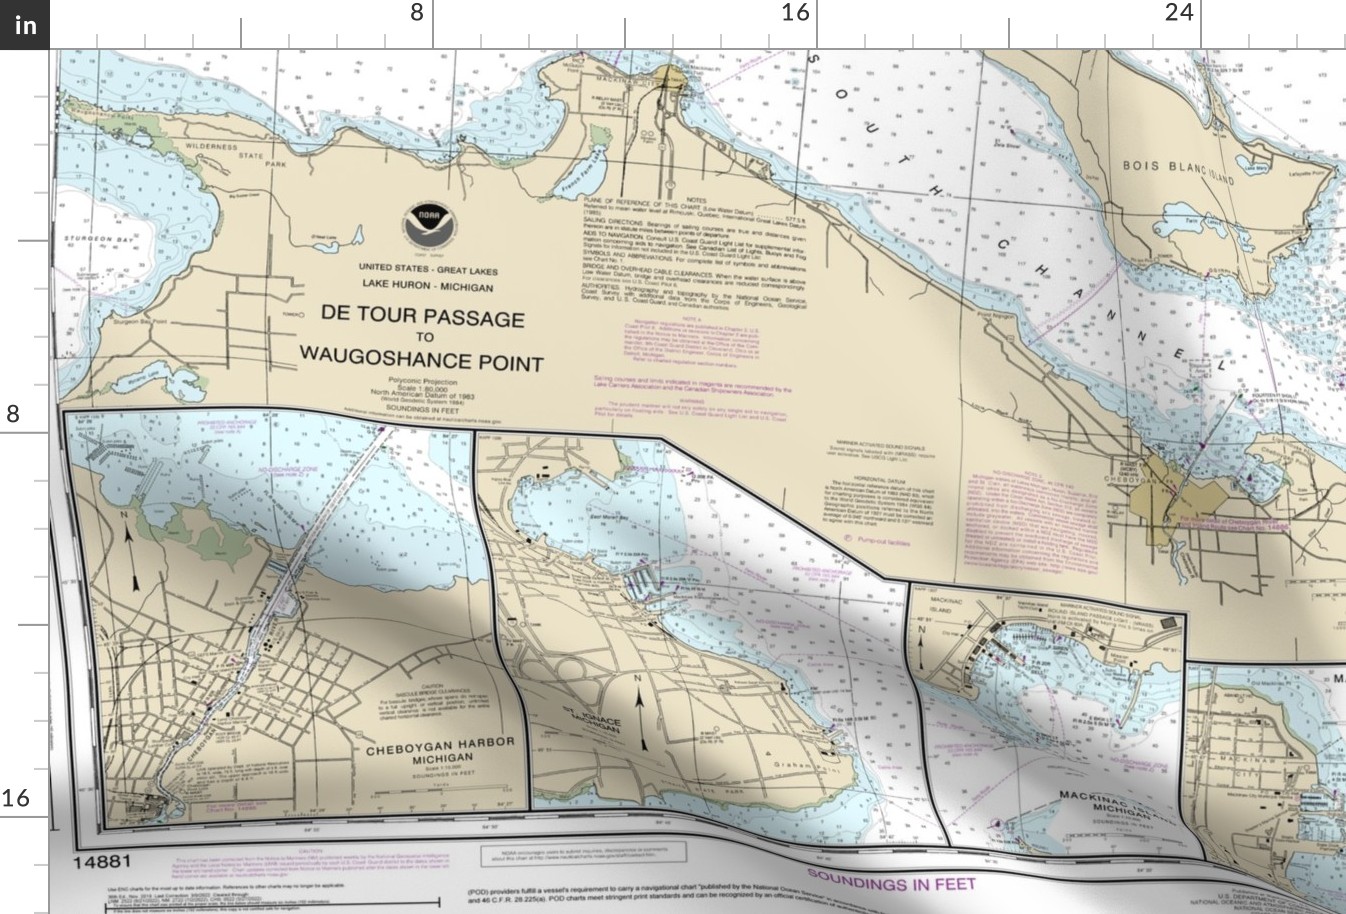 NOAA nautical chart #14881 - northwest end of Lake Huron ; straits of Mackinac - 47.25x36", one map fits a yard of narrow fabric